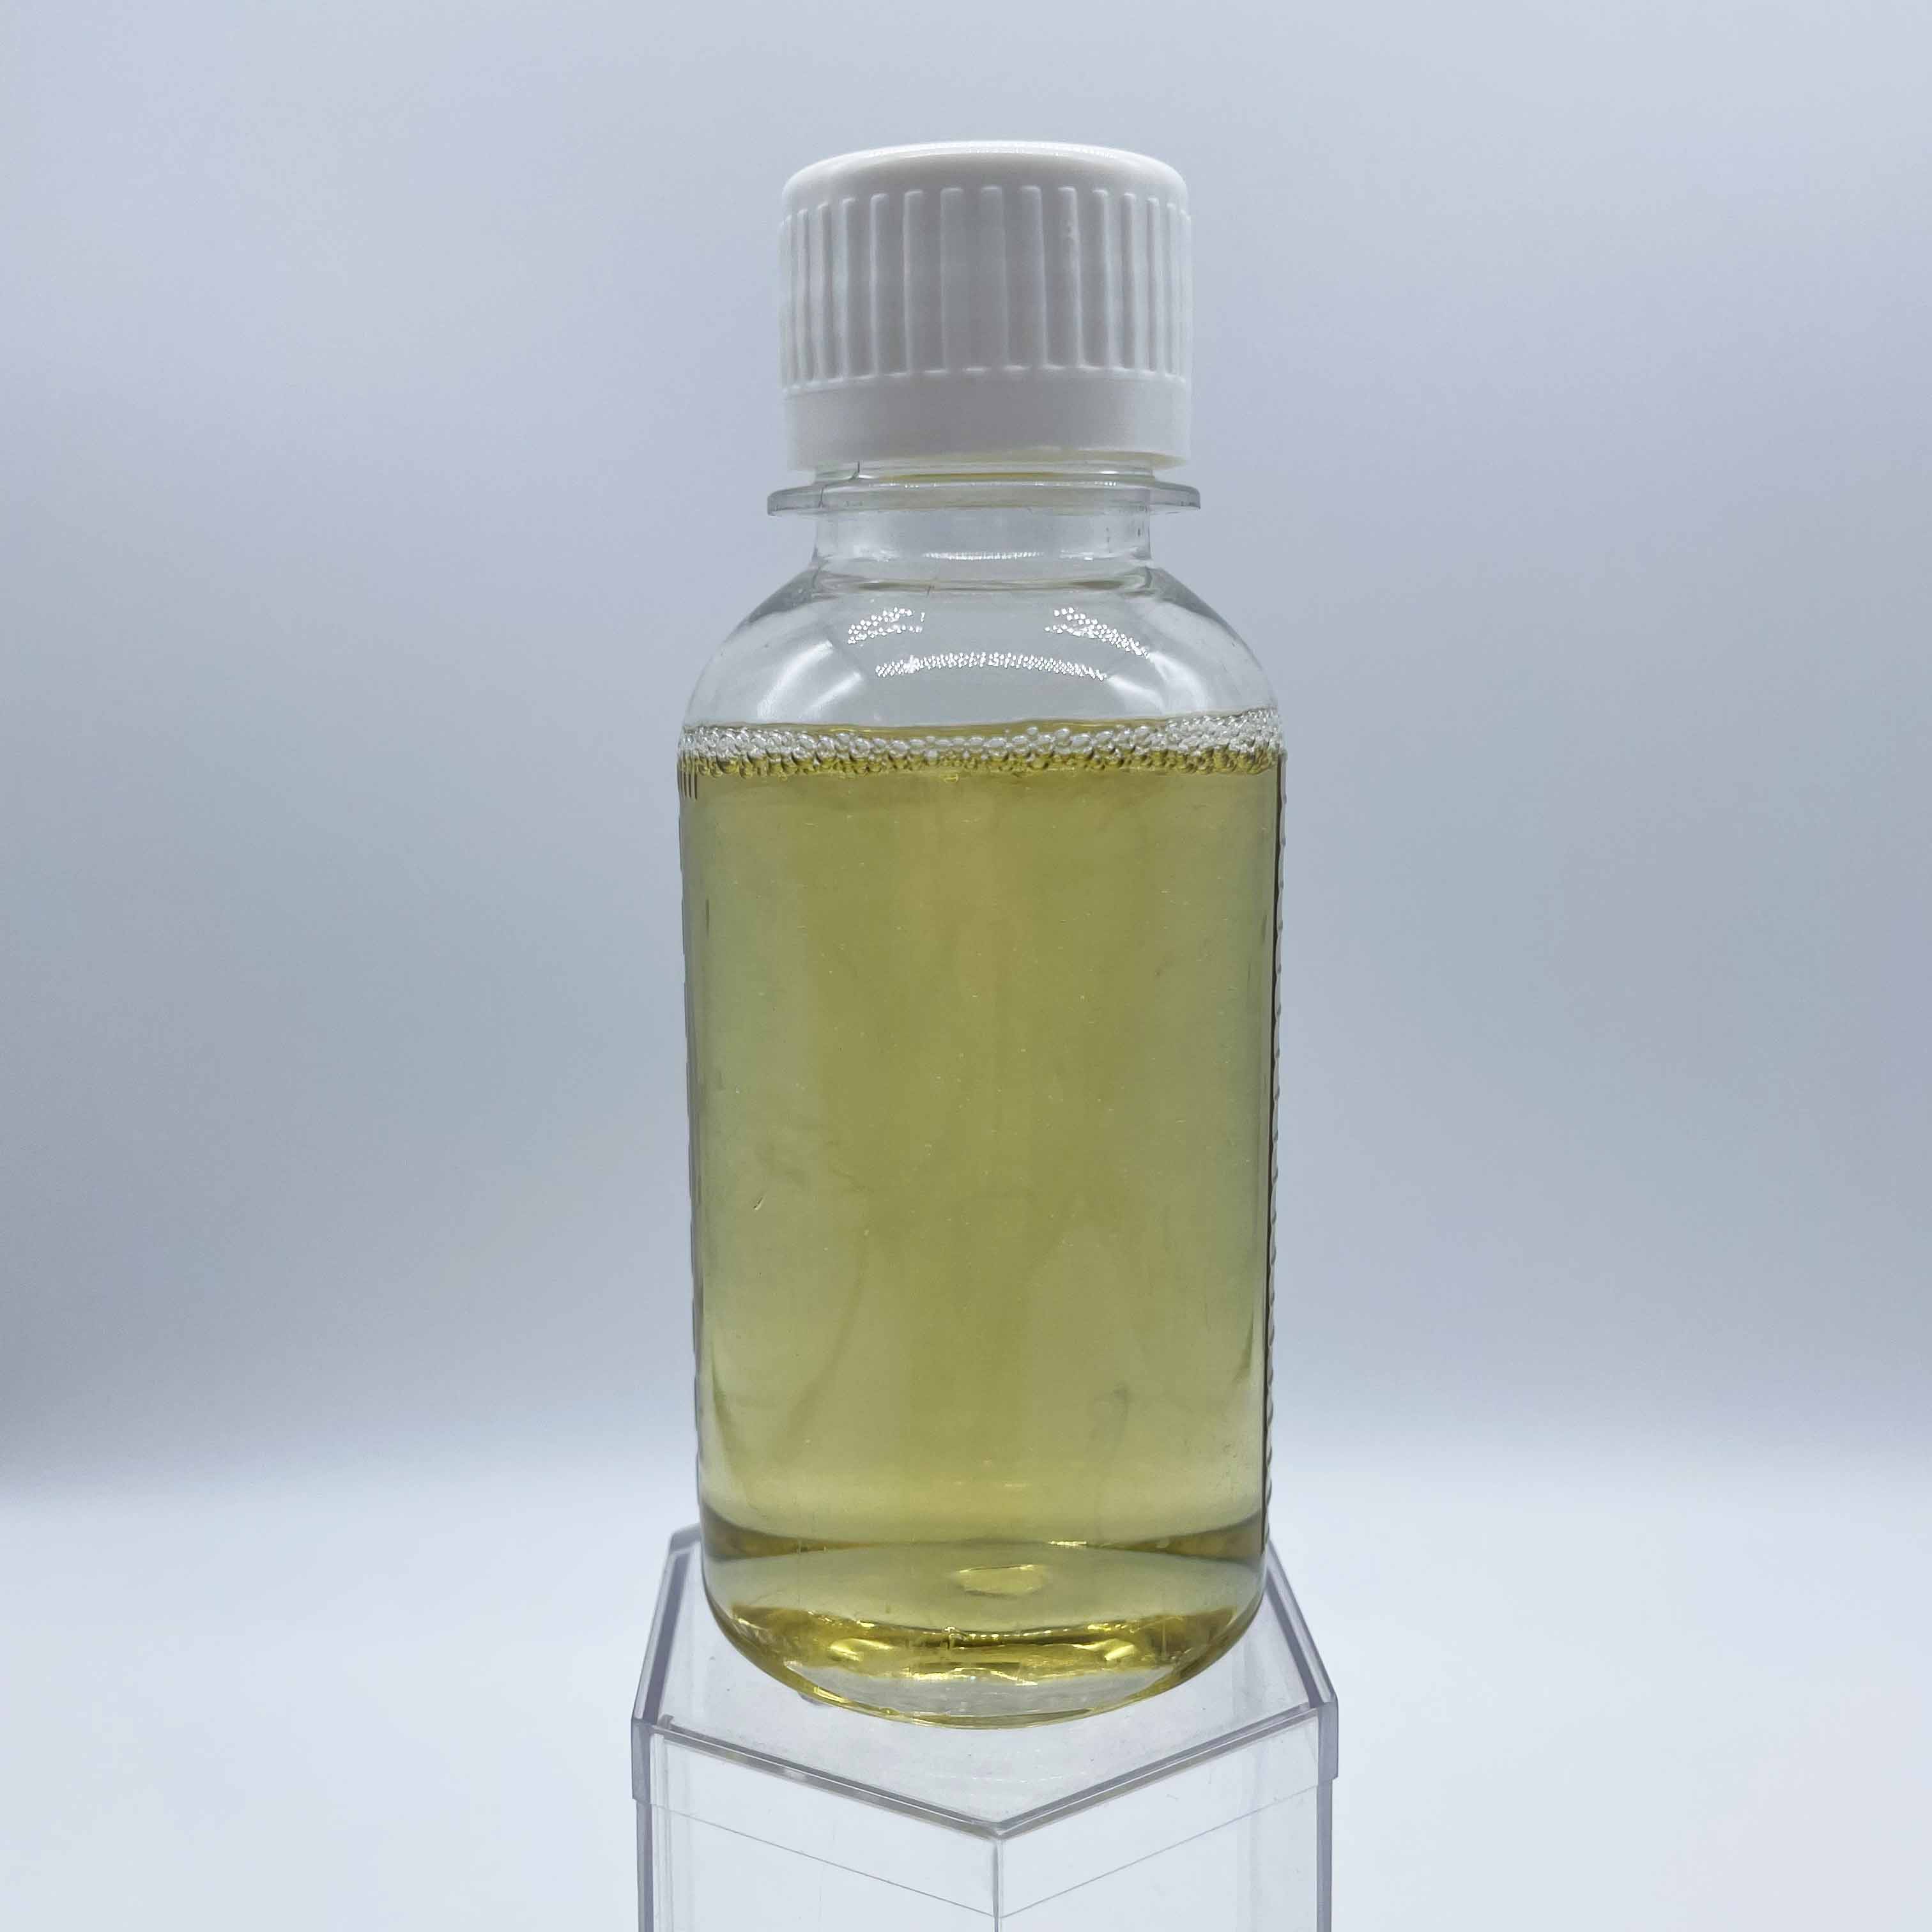 Adjuvant For Glyphosate Soluble Powder(SP)